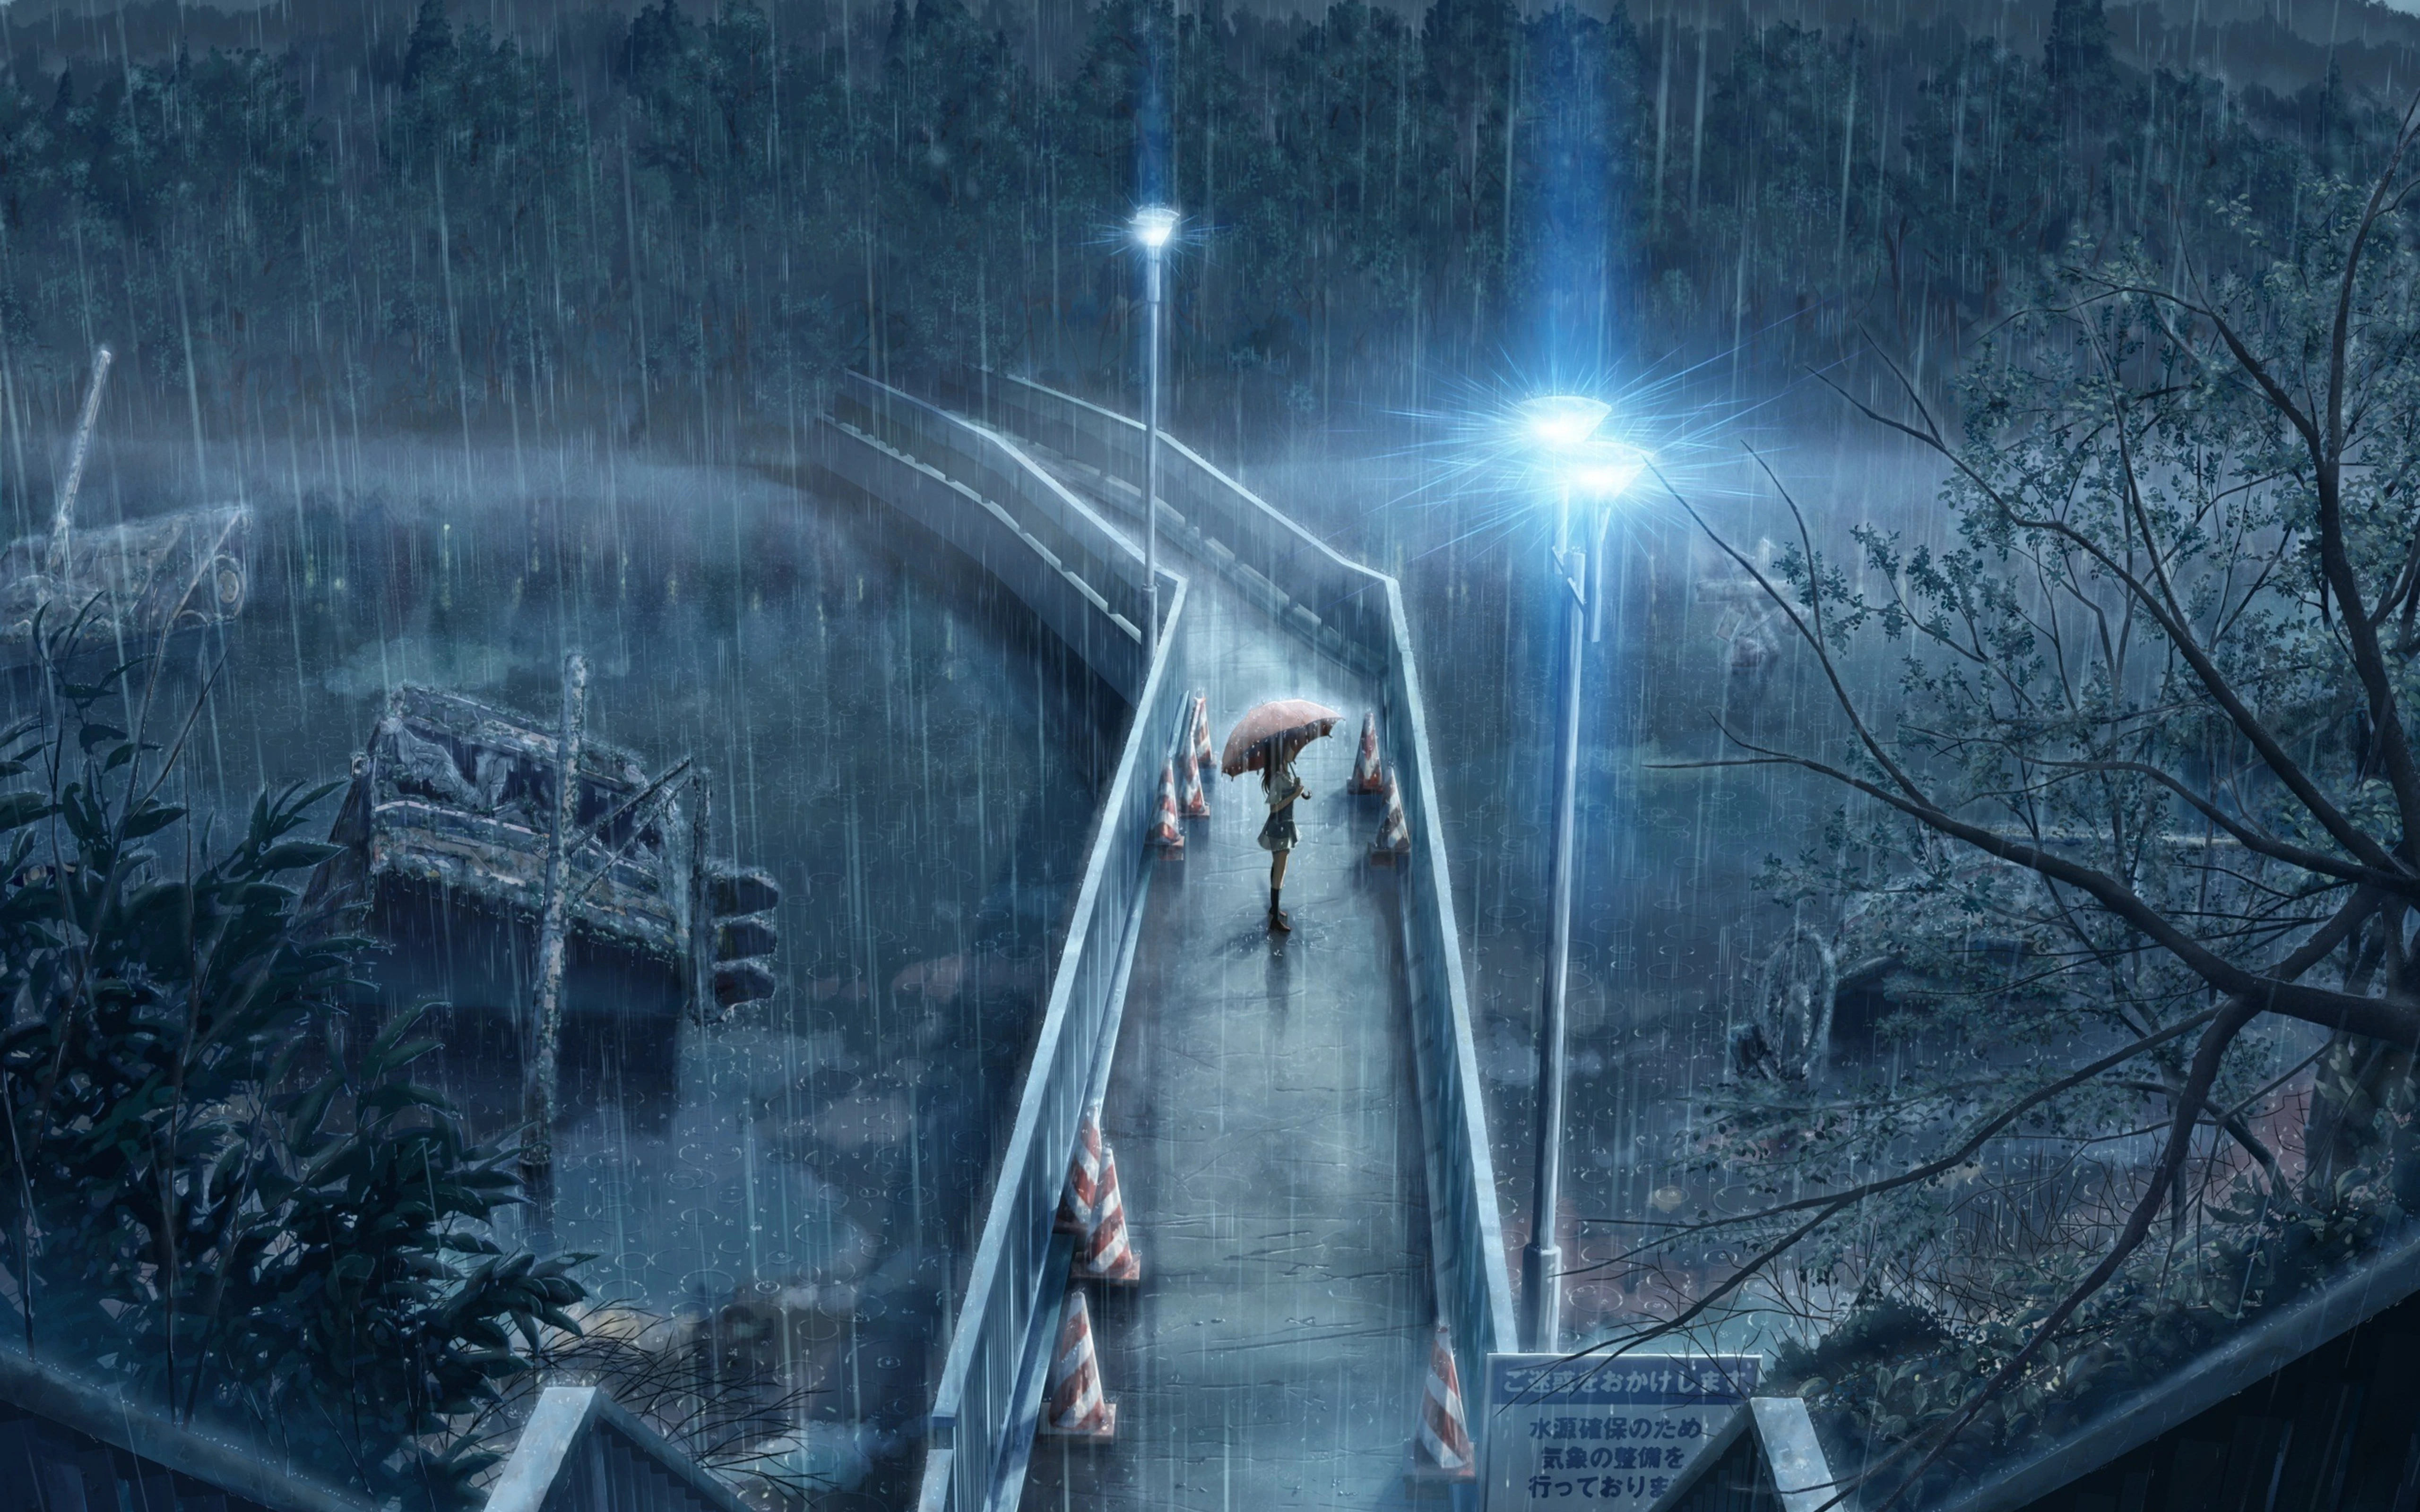 anime girl standing in rain with umbrella 4k 1697015525